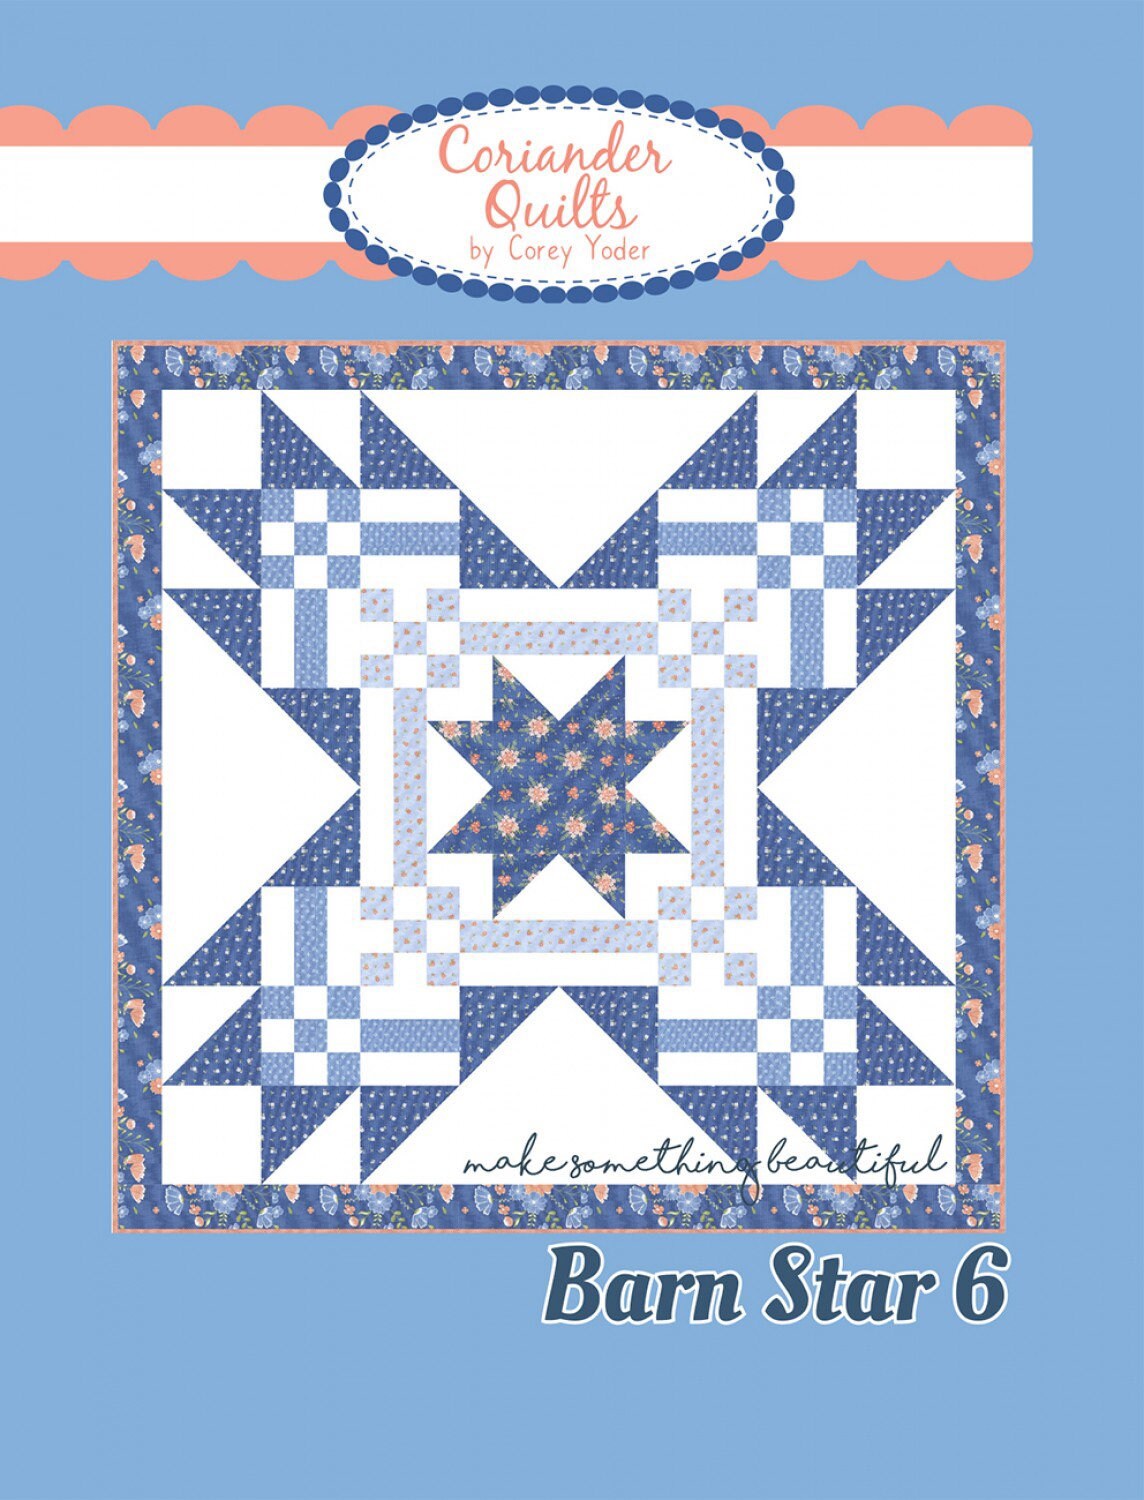 Barn Star 6 Quilt Pattern - Coriander Quilts - Corey Yoder